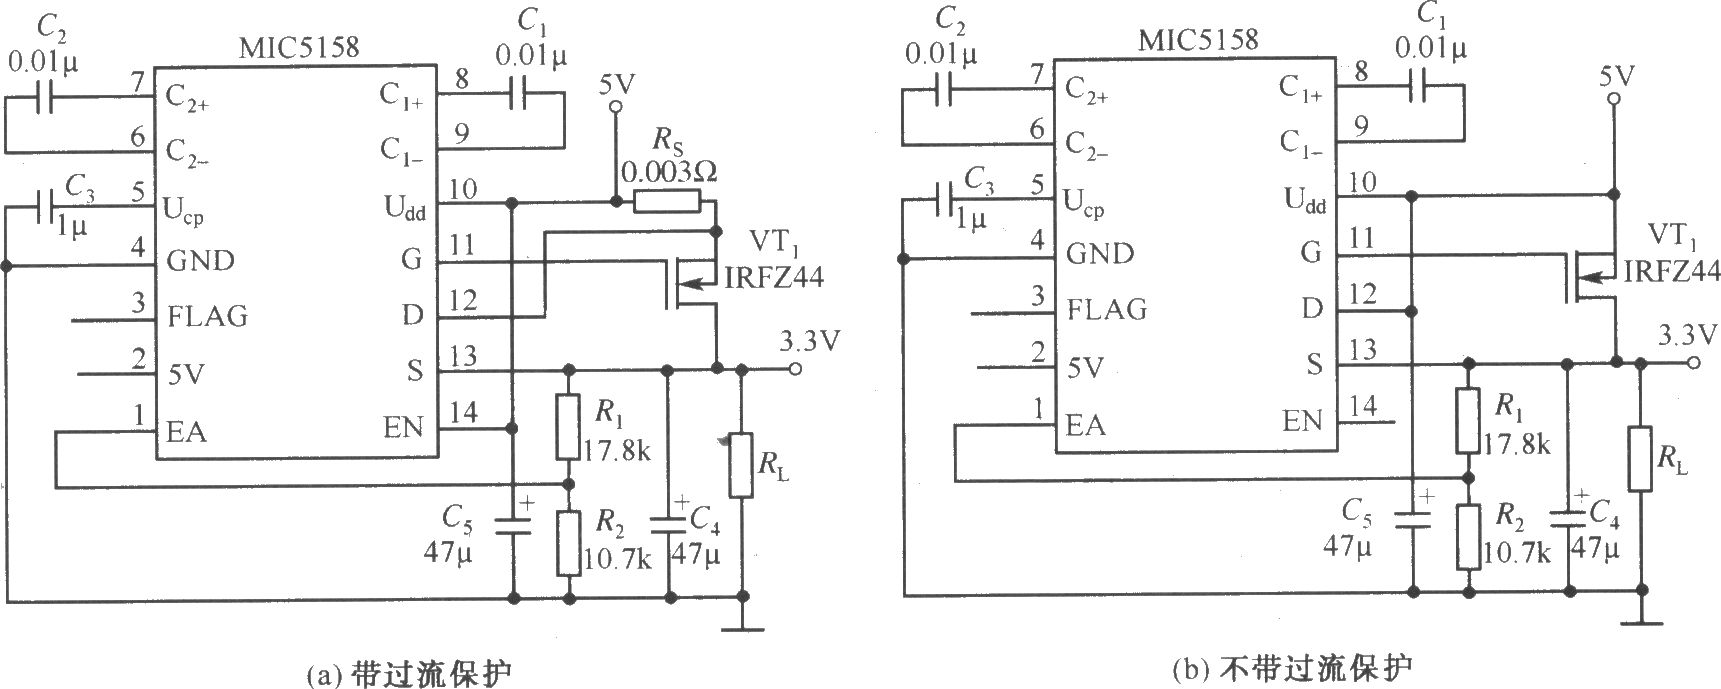 MIC5158构成的外围电路简单的5V输入、3.3V／10A输出的线性稳压器